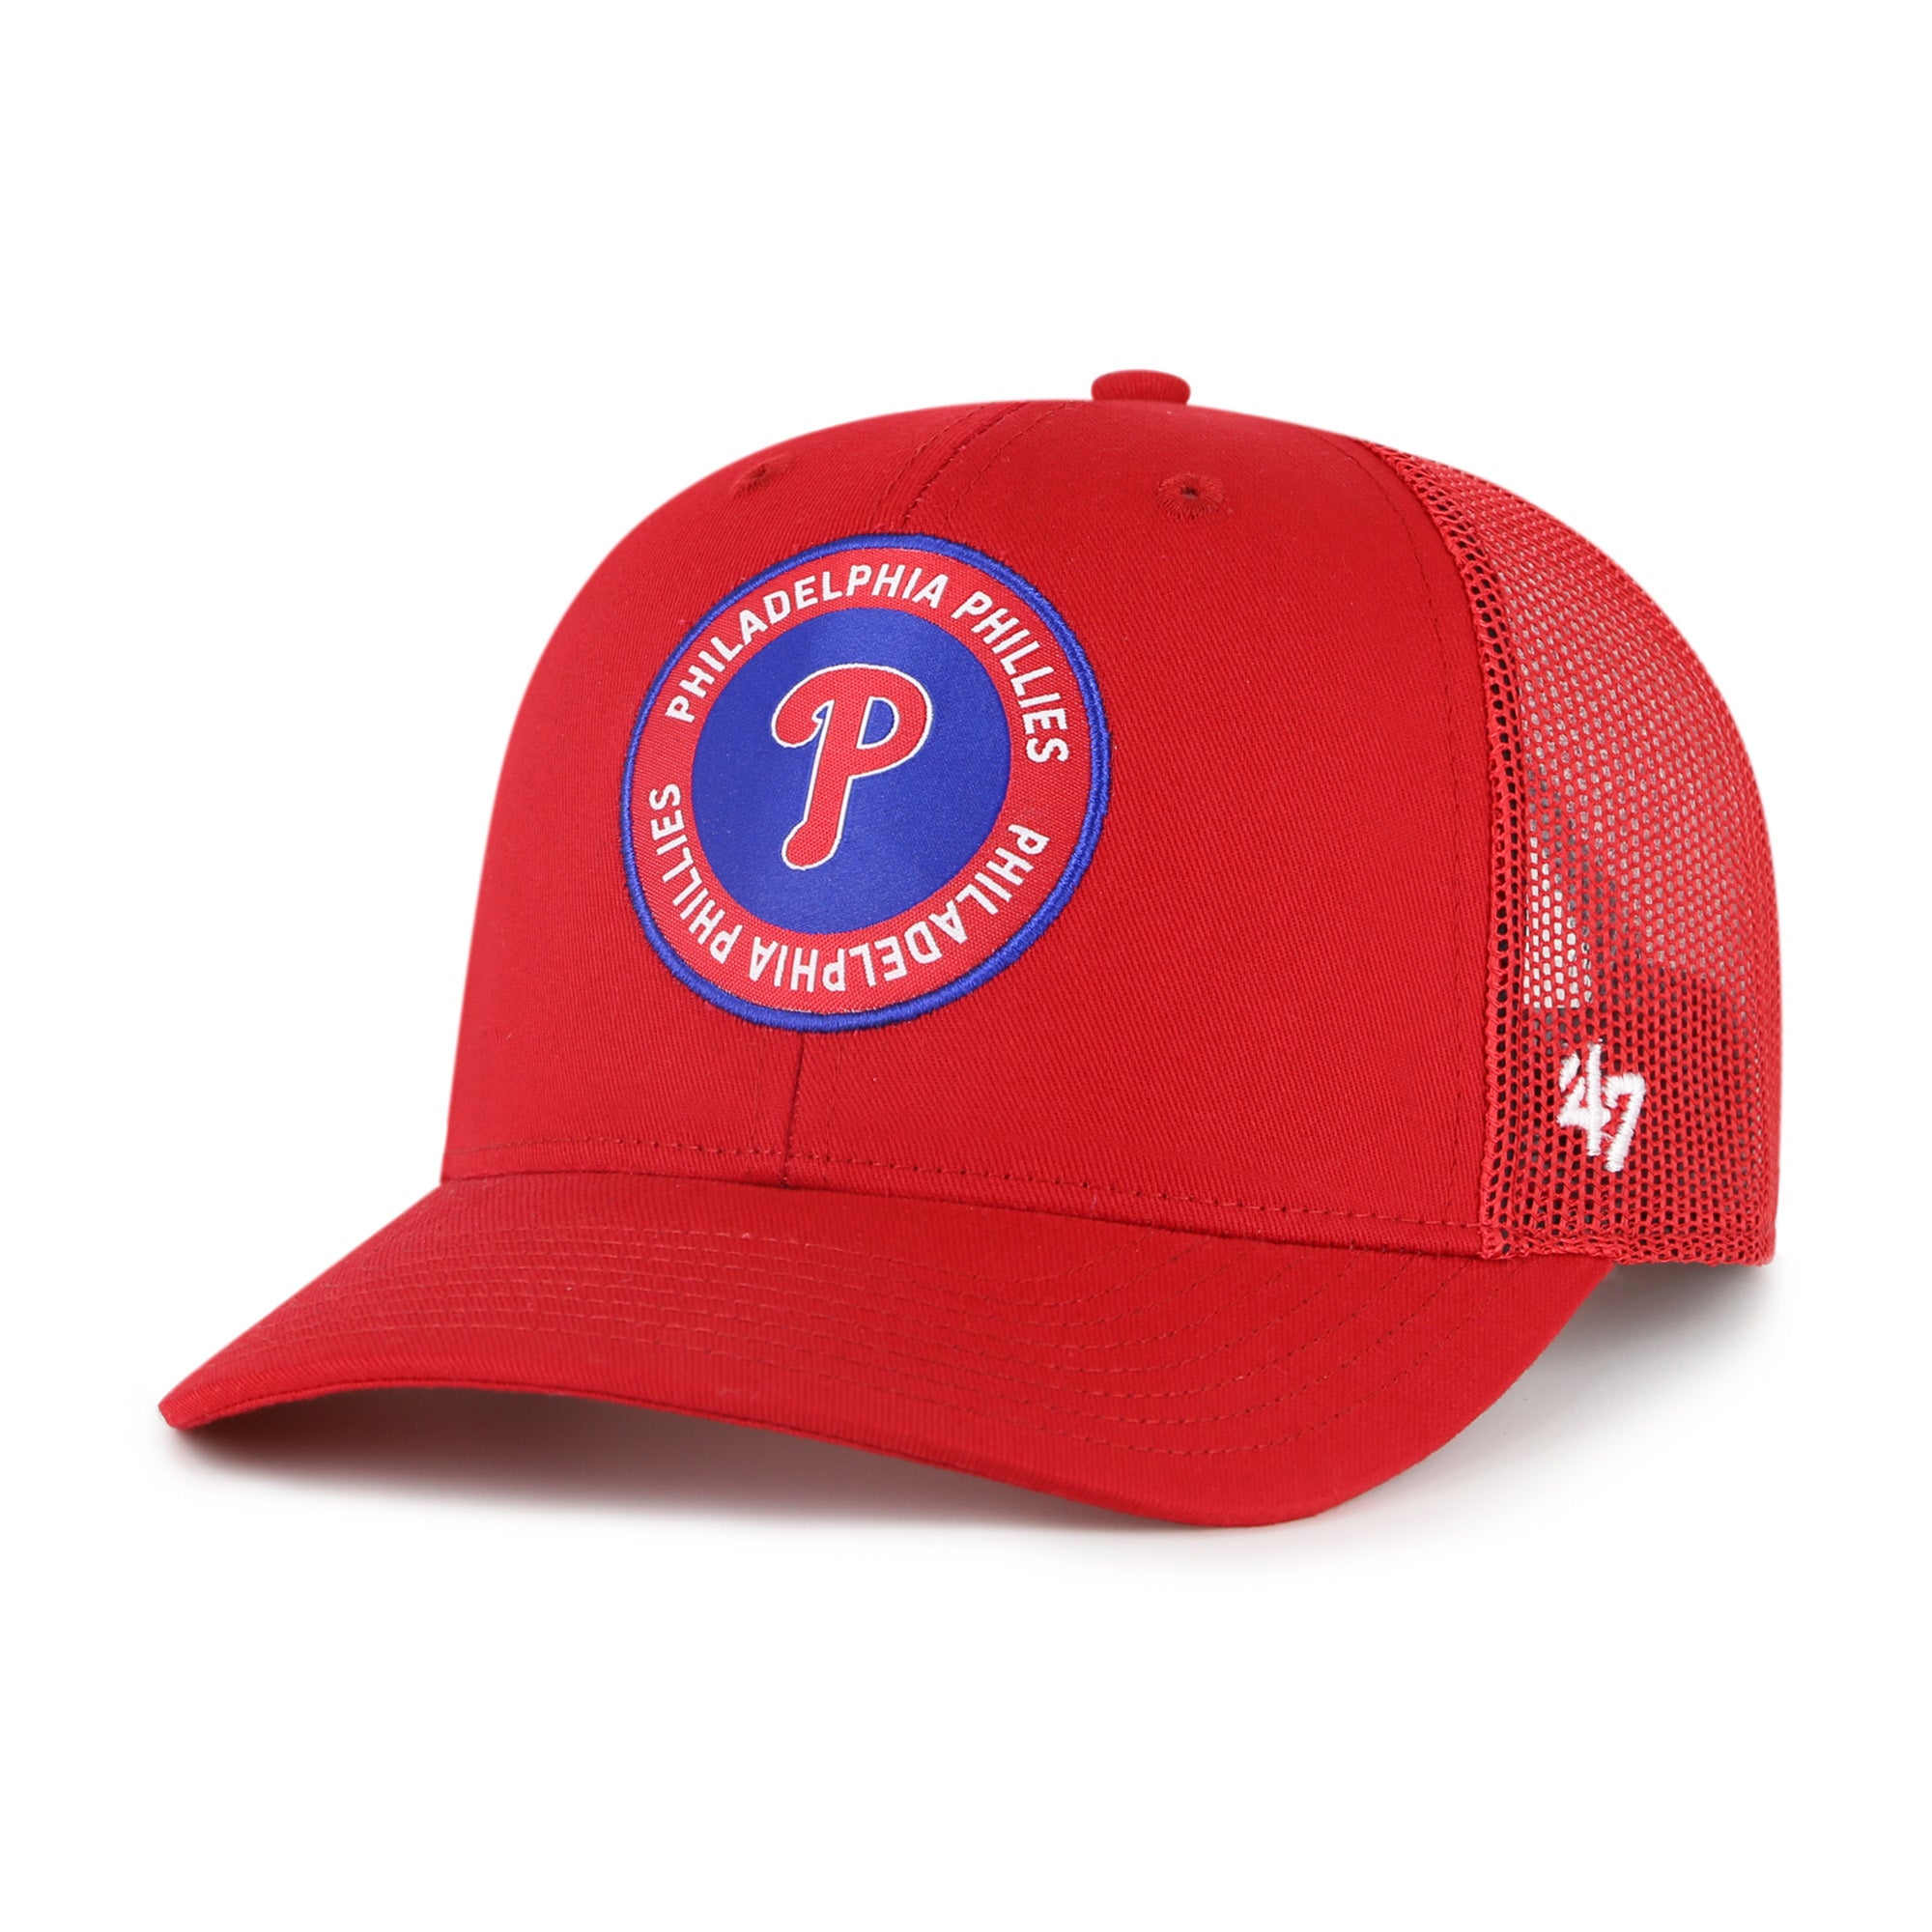 47 Youth Philadelphia Phillies Trucker Hat - Red - 1 Each